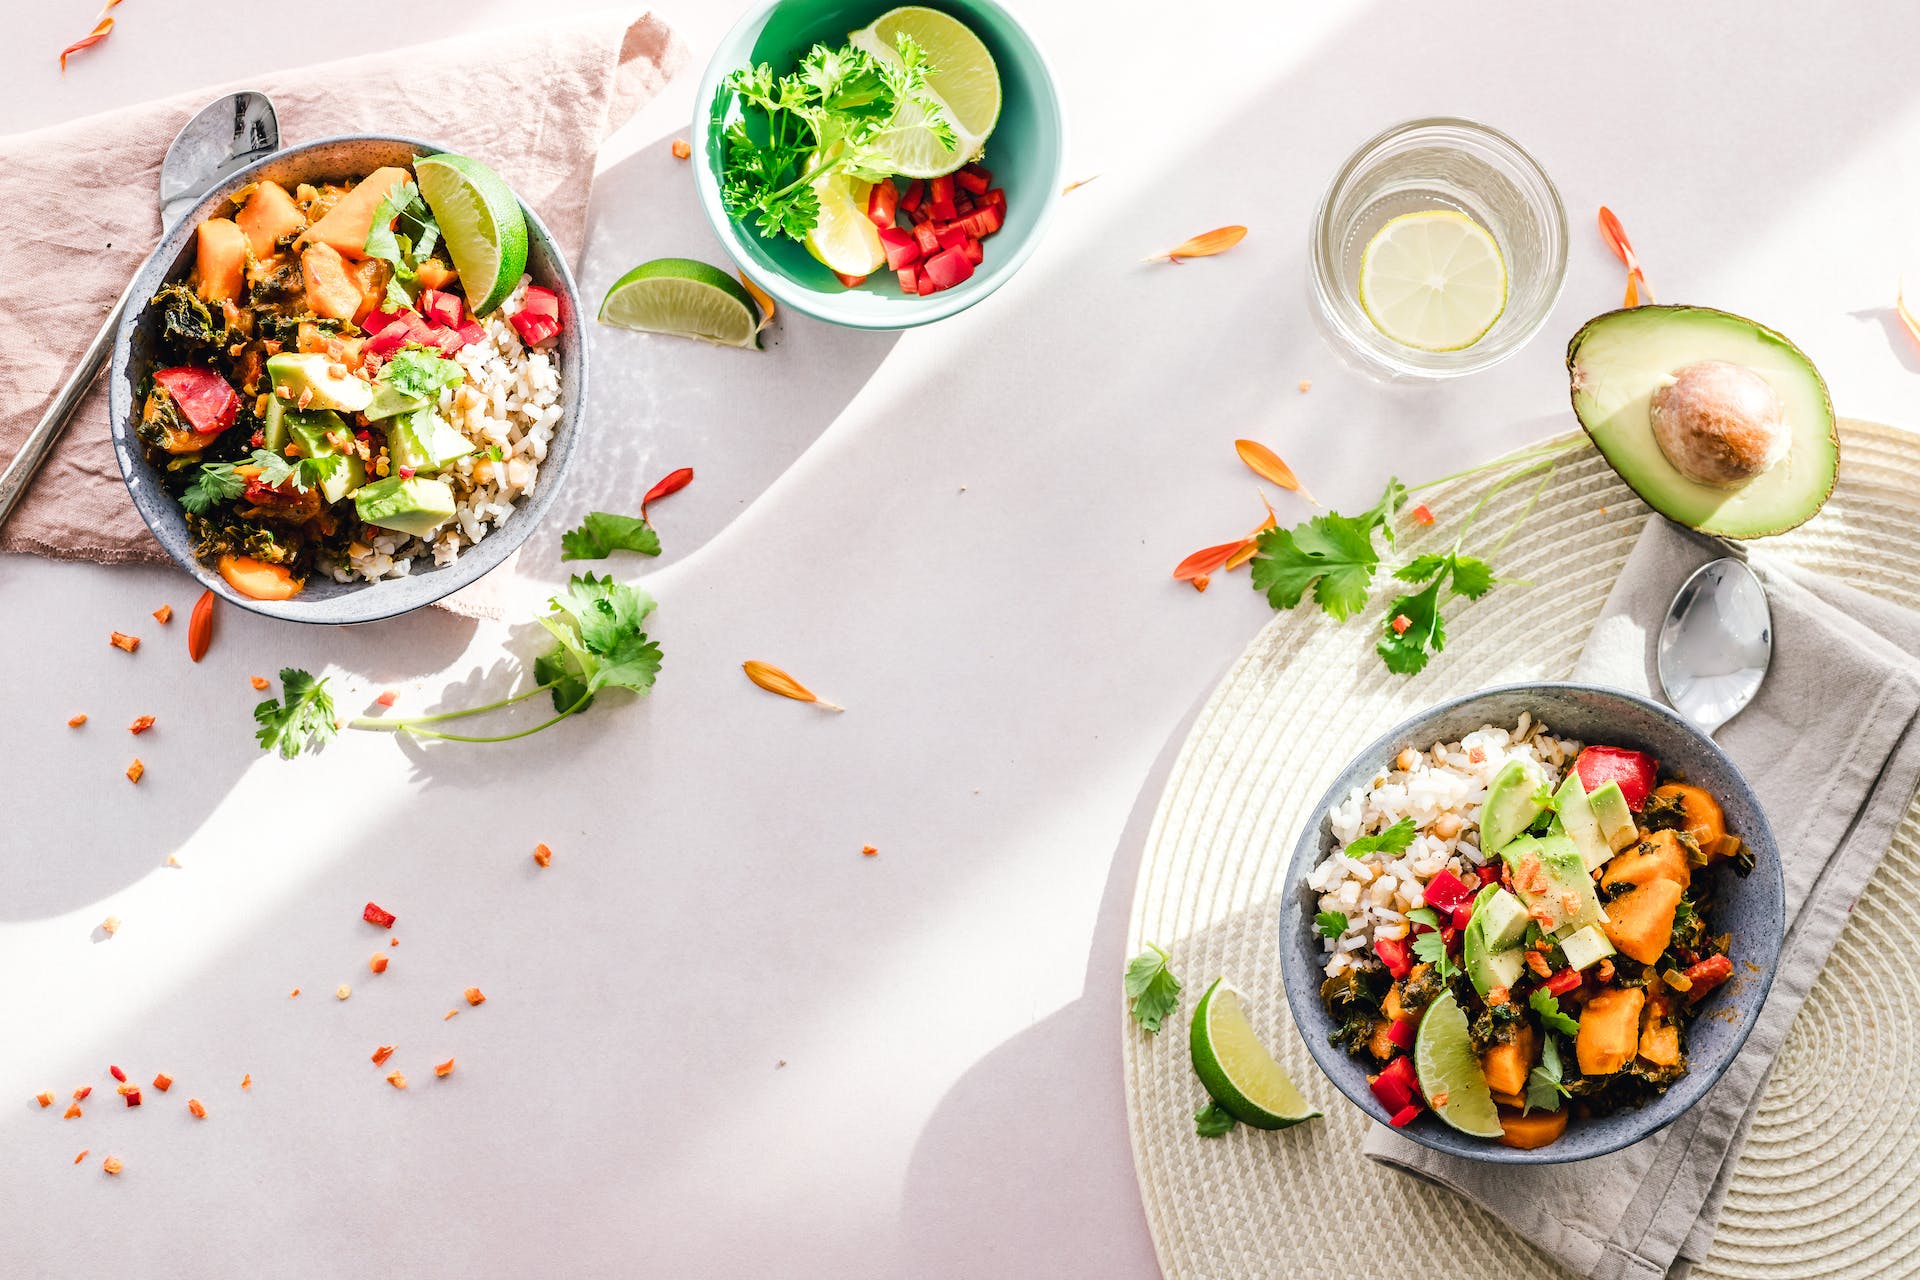 Warm vegetable salads in bowls | Source: Pexels